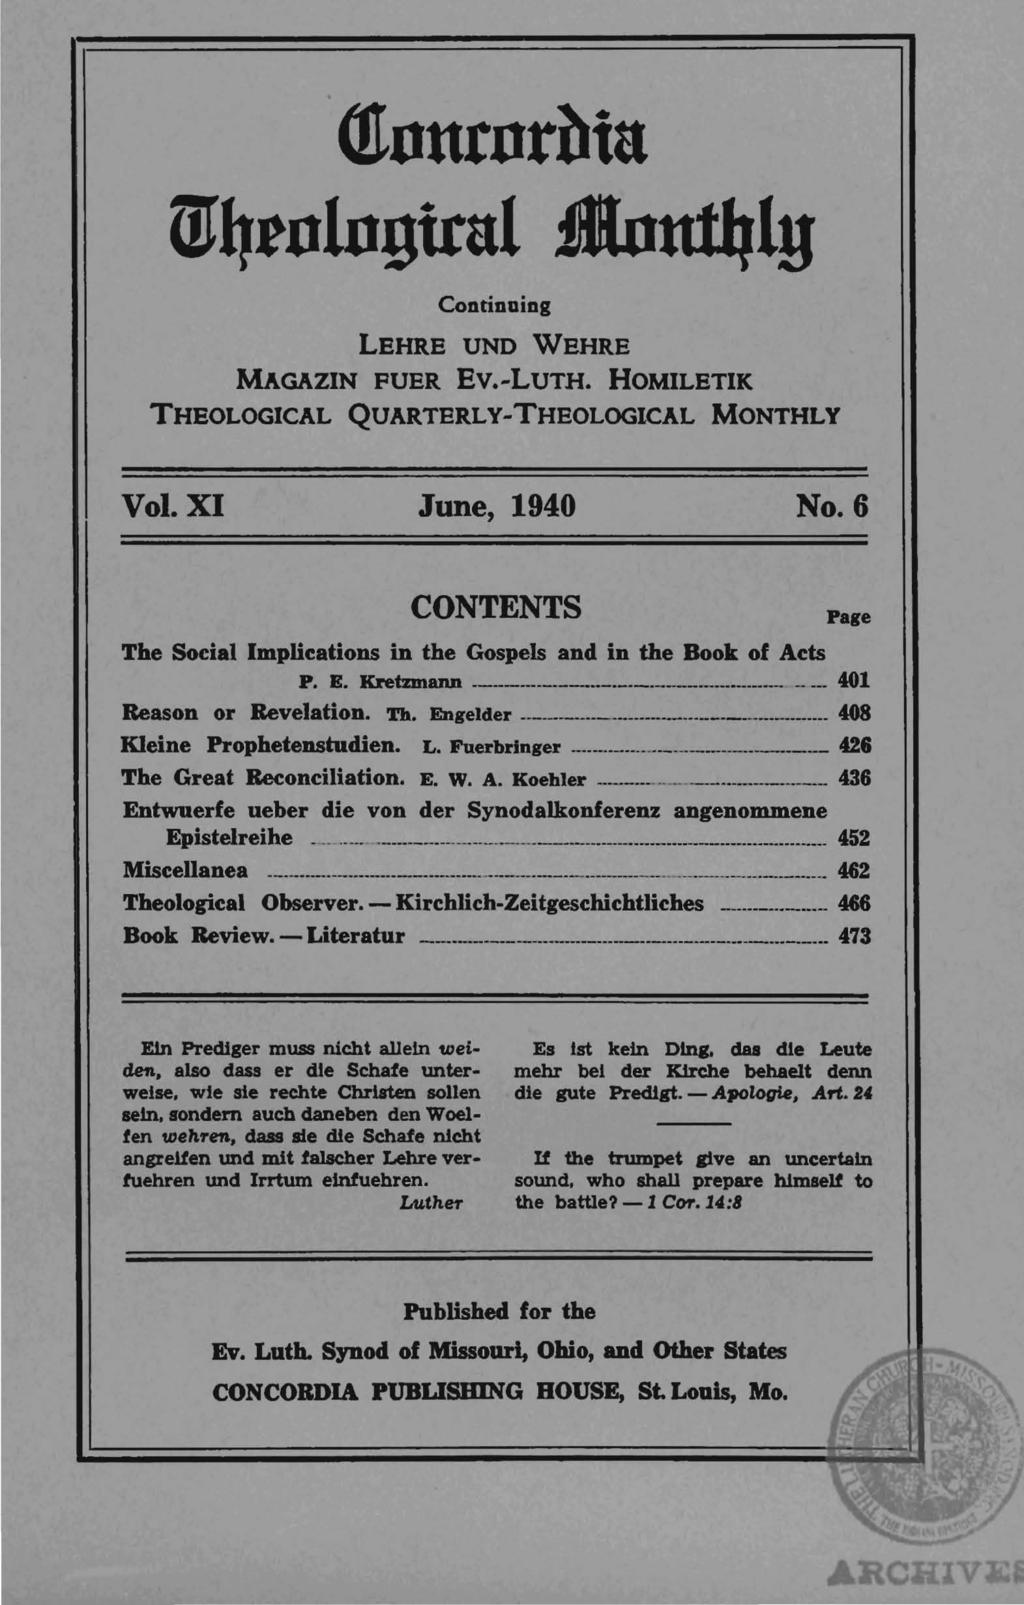 <ttnurnrbia m4rningtral Atutltly Continning LEHRE UNO VVEHRE MAGAZIN FUER Ev.-LuTH. HOMILETIK THEOLOGICAL QUARTERLy-THEOLOGICAL MONTHLY Vol. XI June, 1940 No.